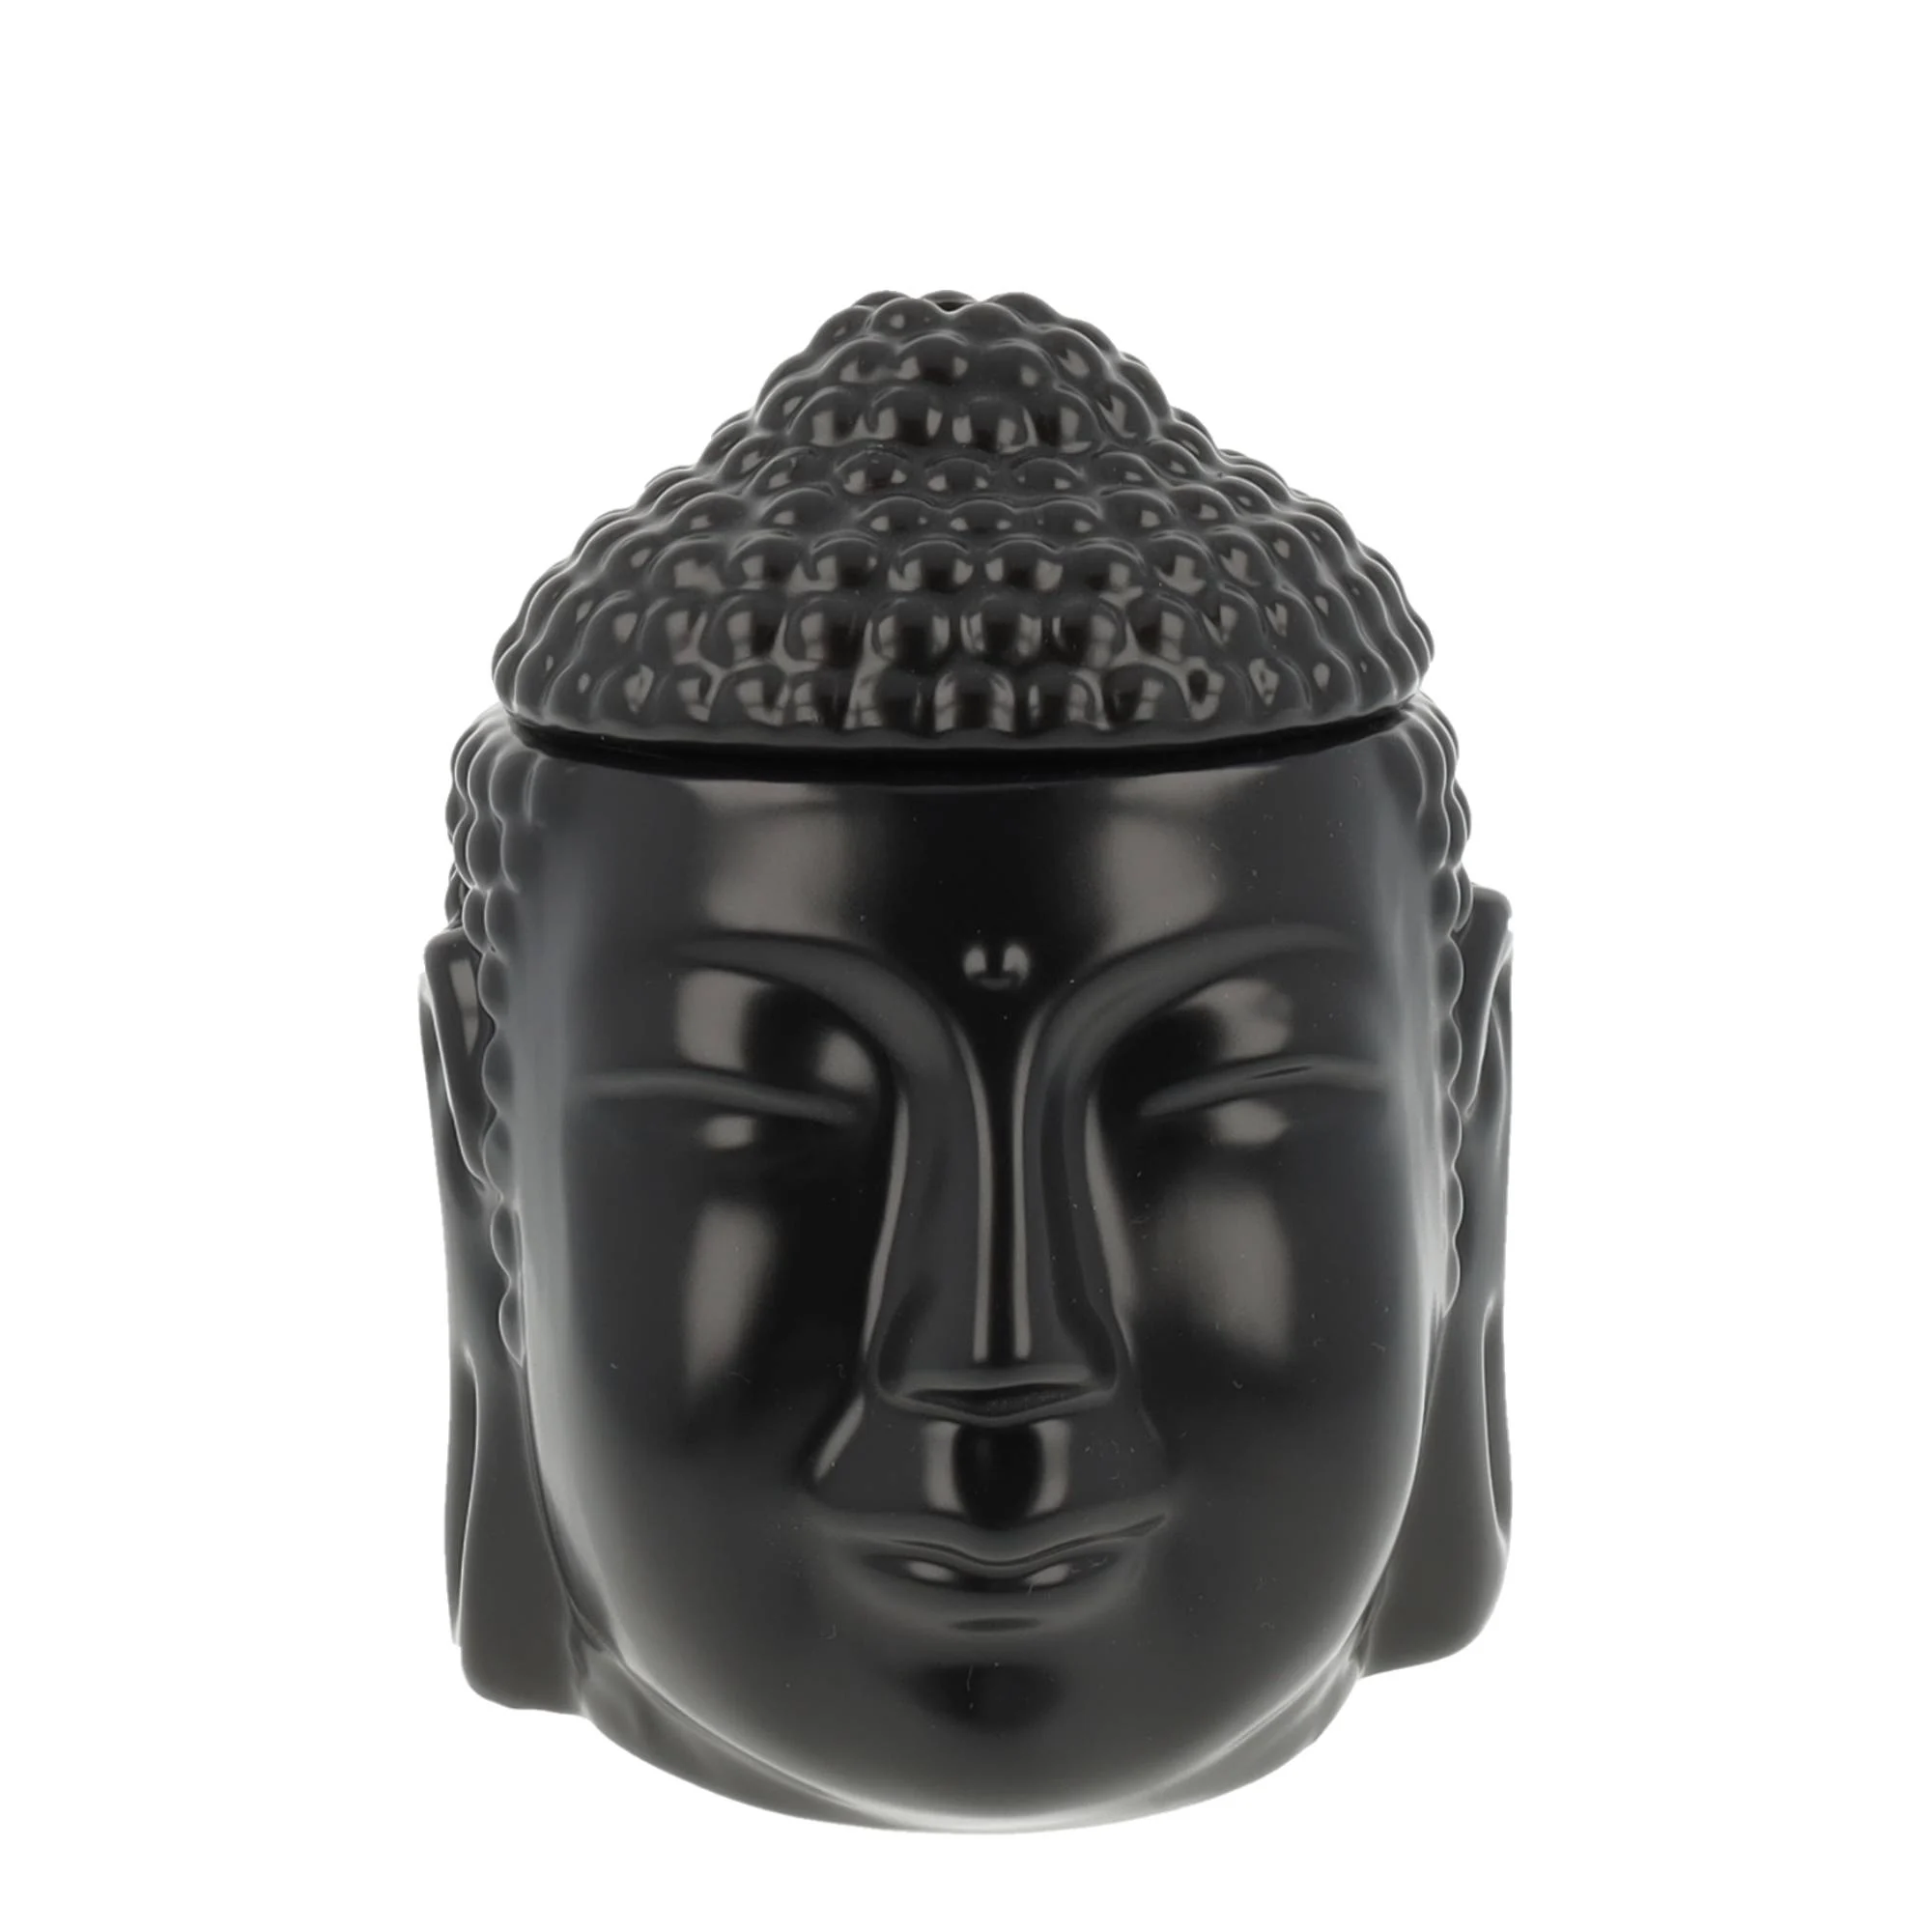 scentchips-buddha-head-black-scented-wax-burner